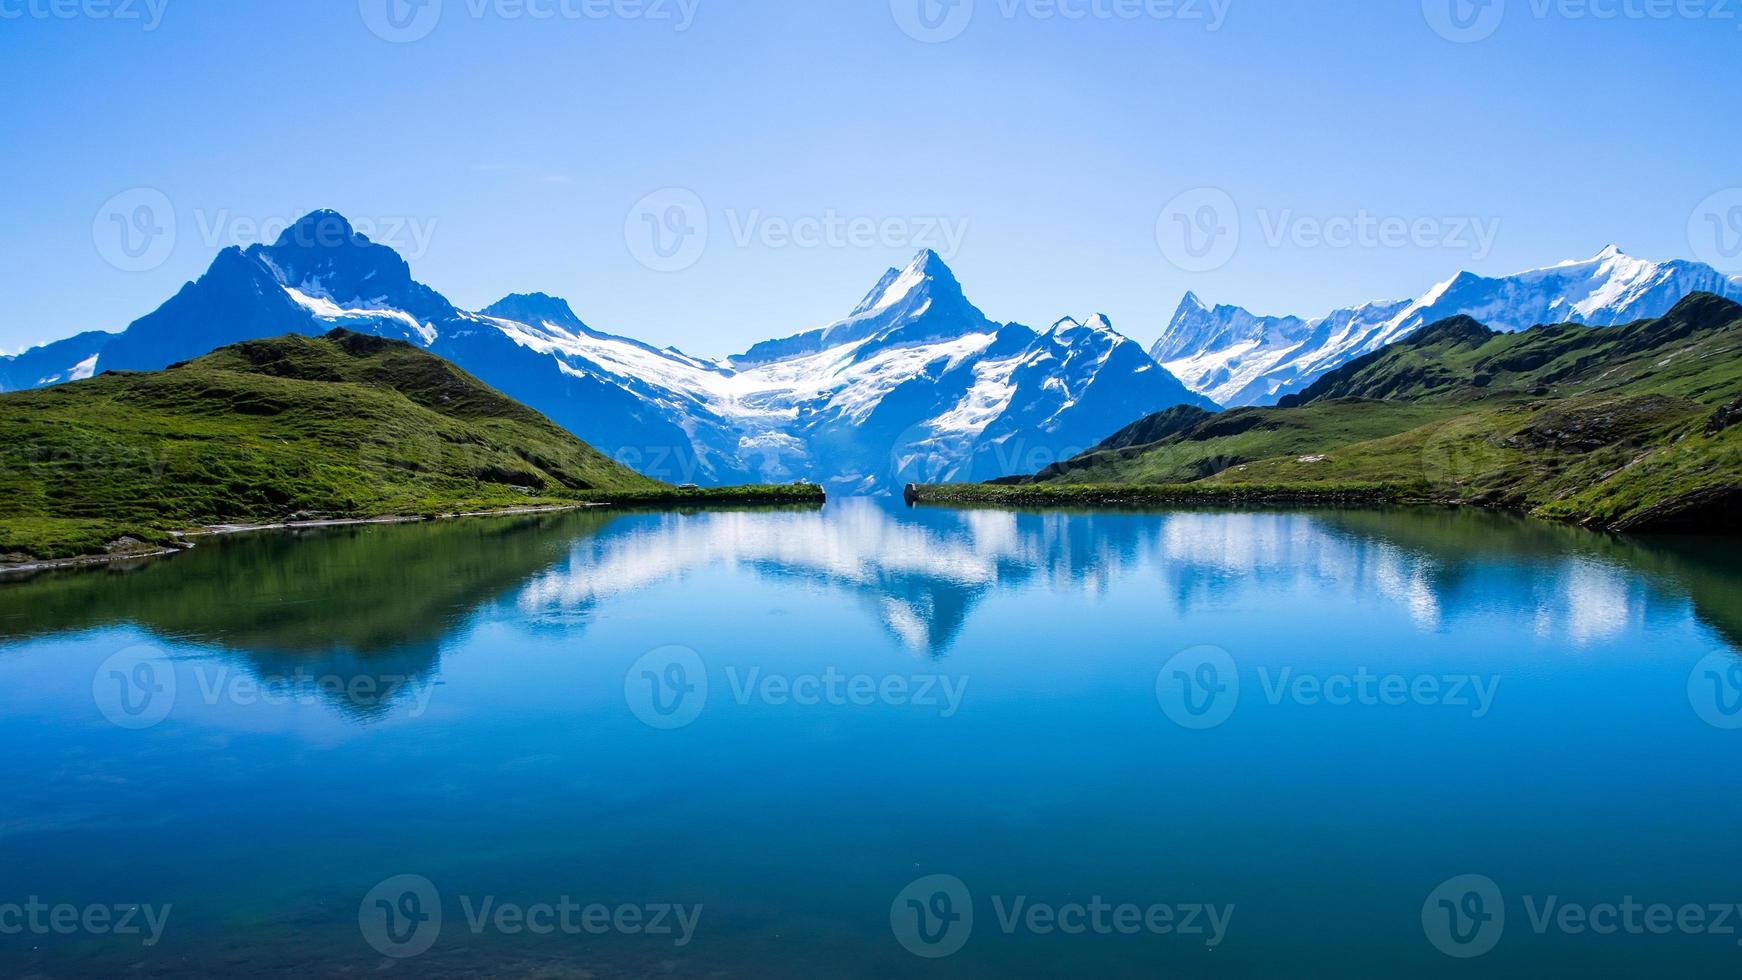 Reflection of the famous Matterhorn in lake, Switzerland photo